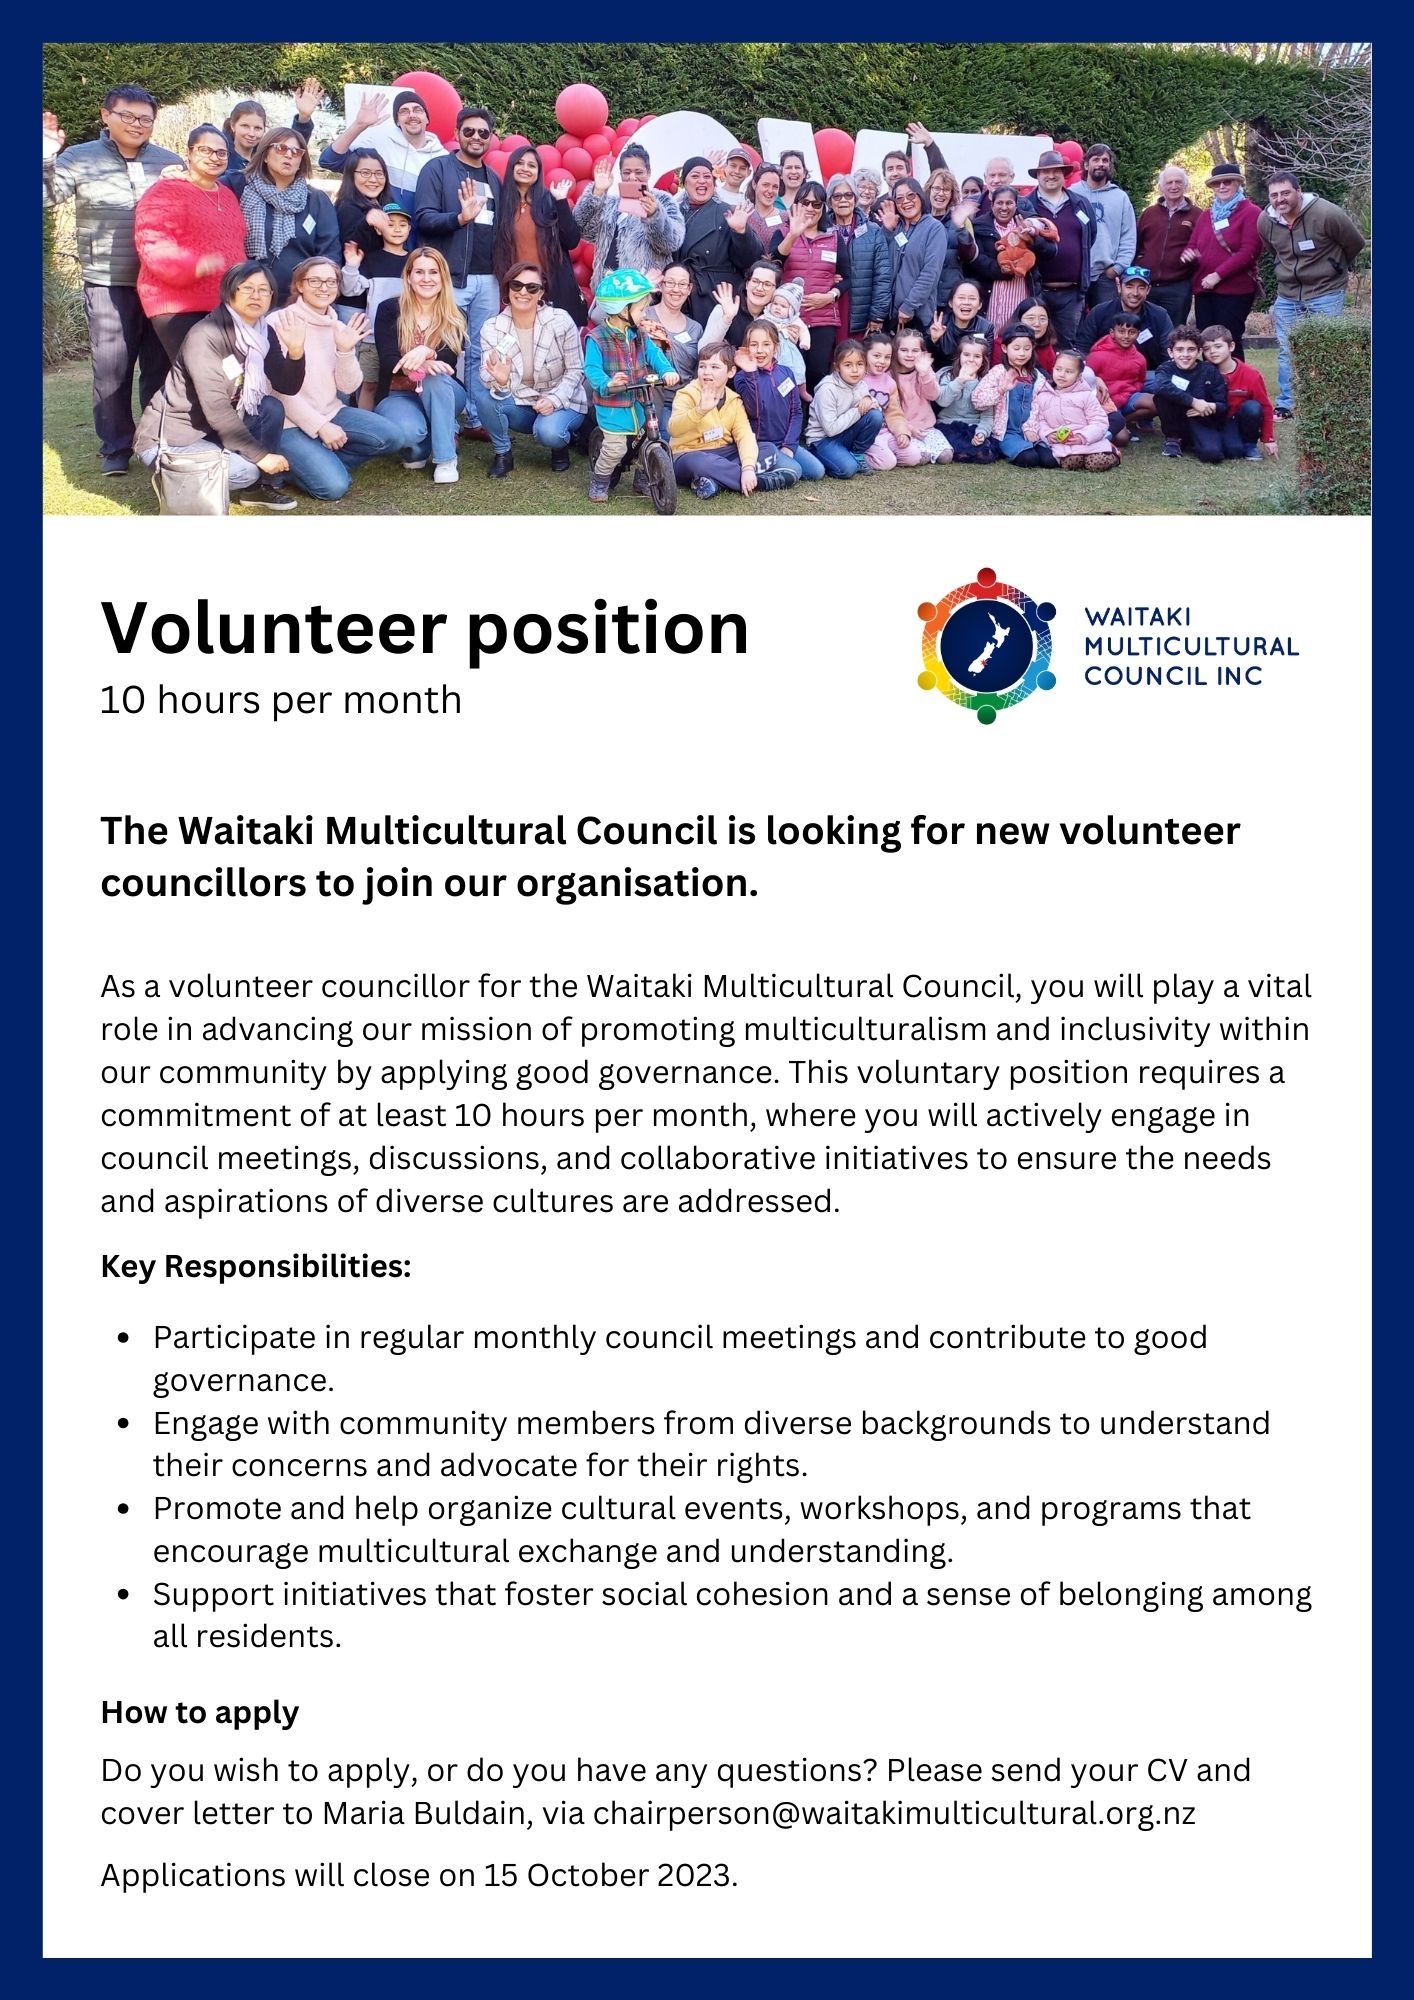 Waitaki Multicultural Volunteer Position available